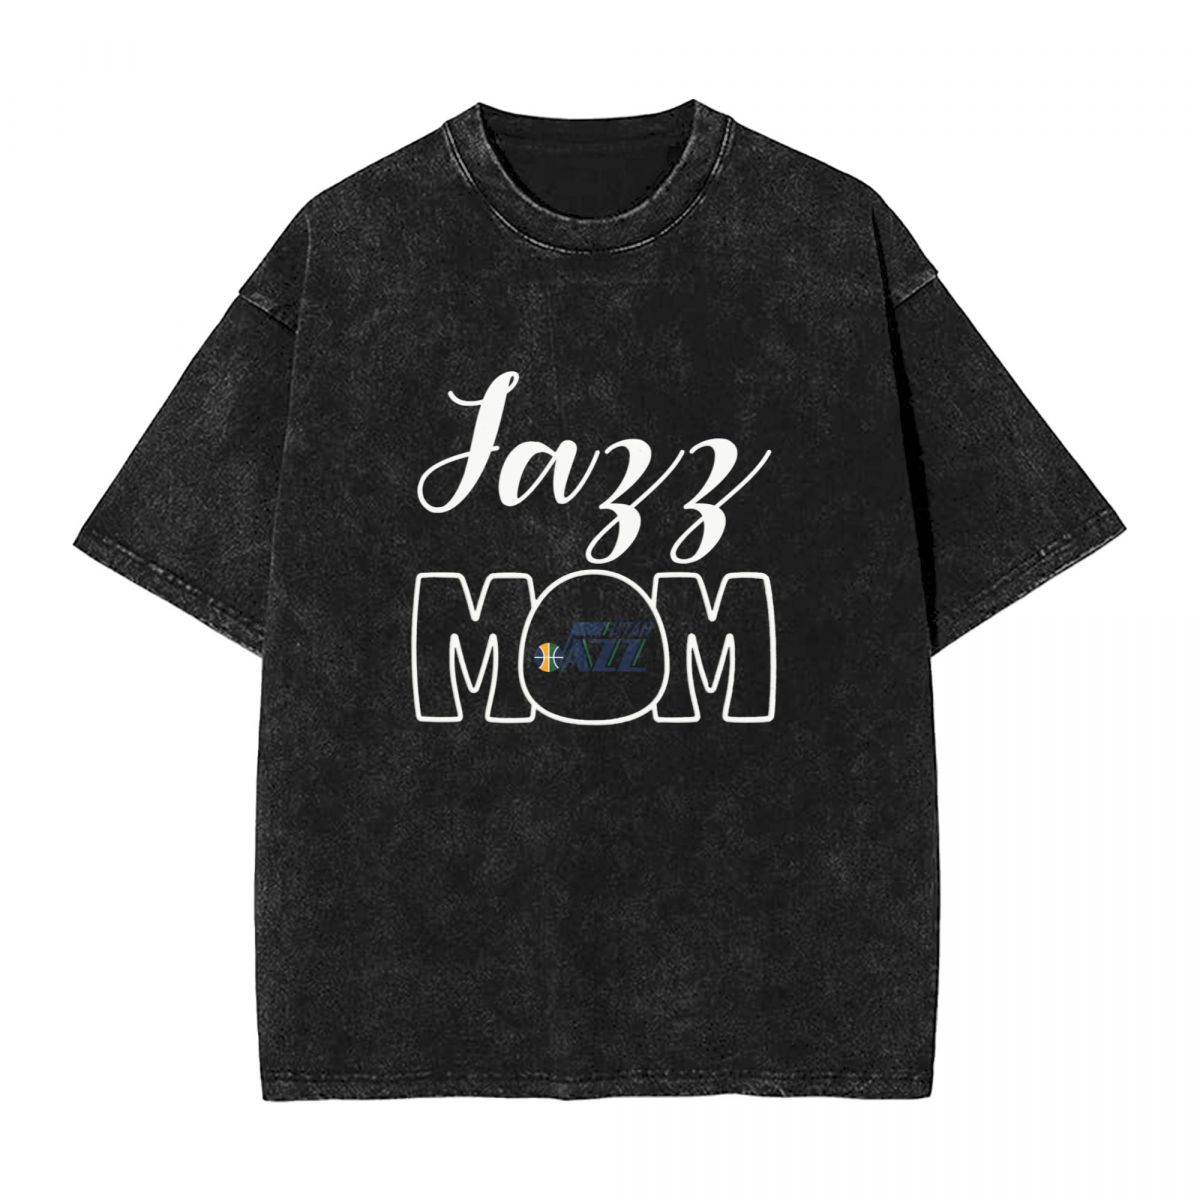 Utah Jazz Mom Men's Oversized Streetwear Tee Shirts